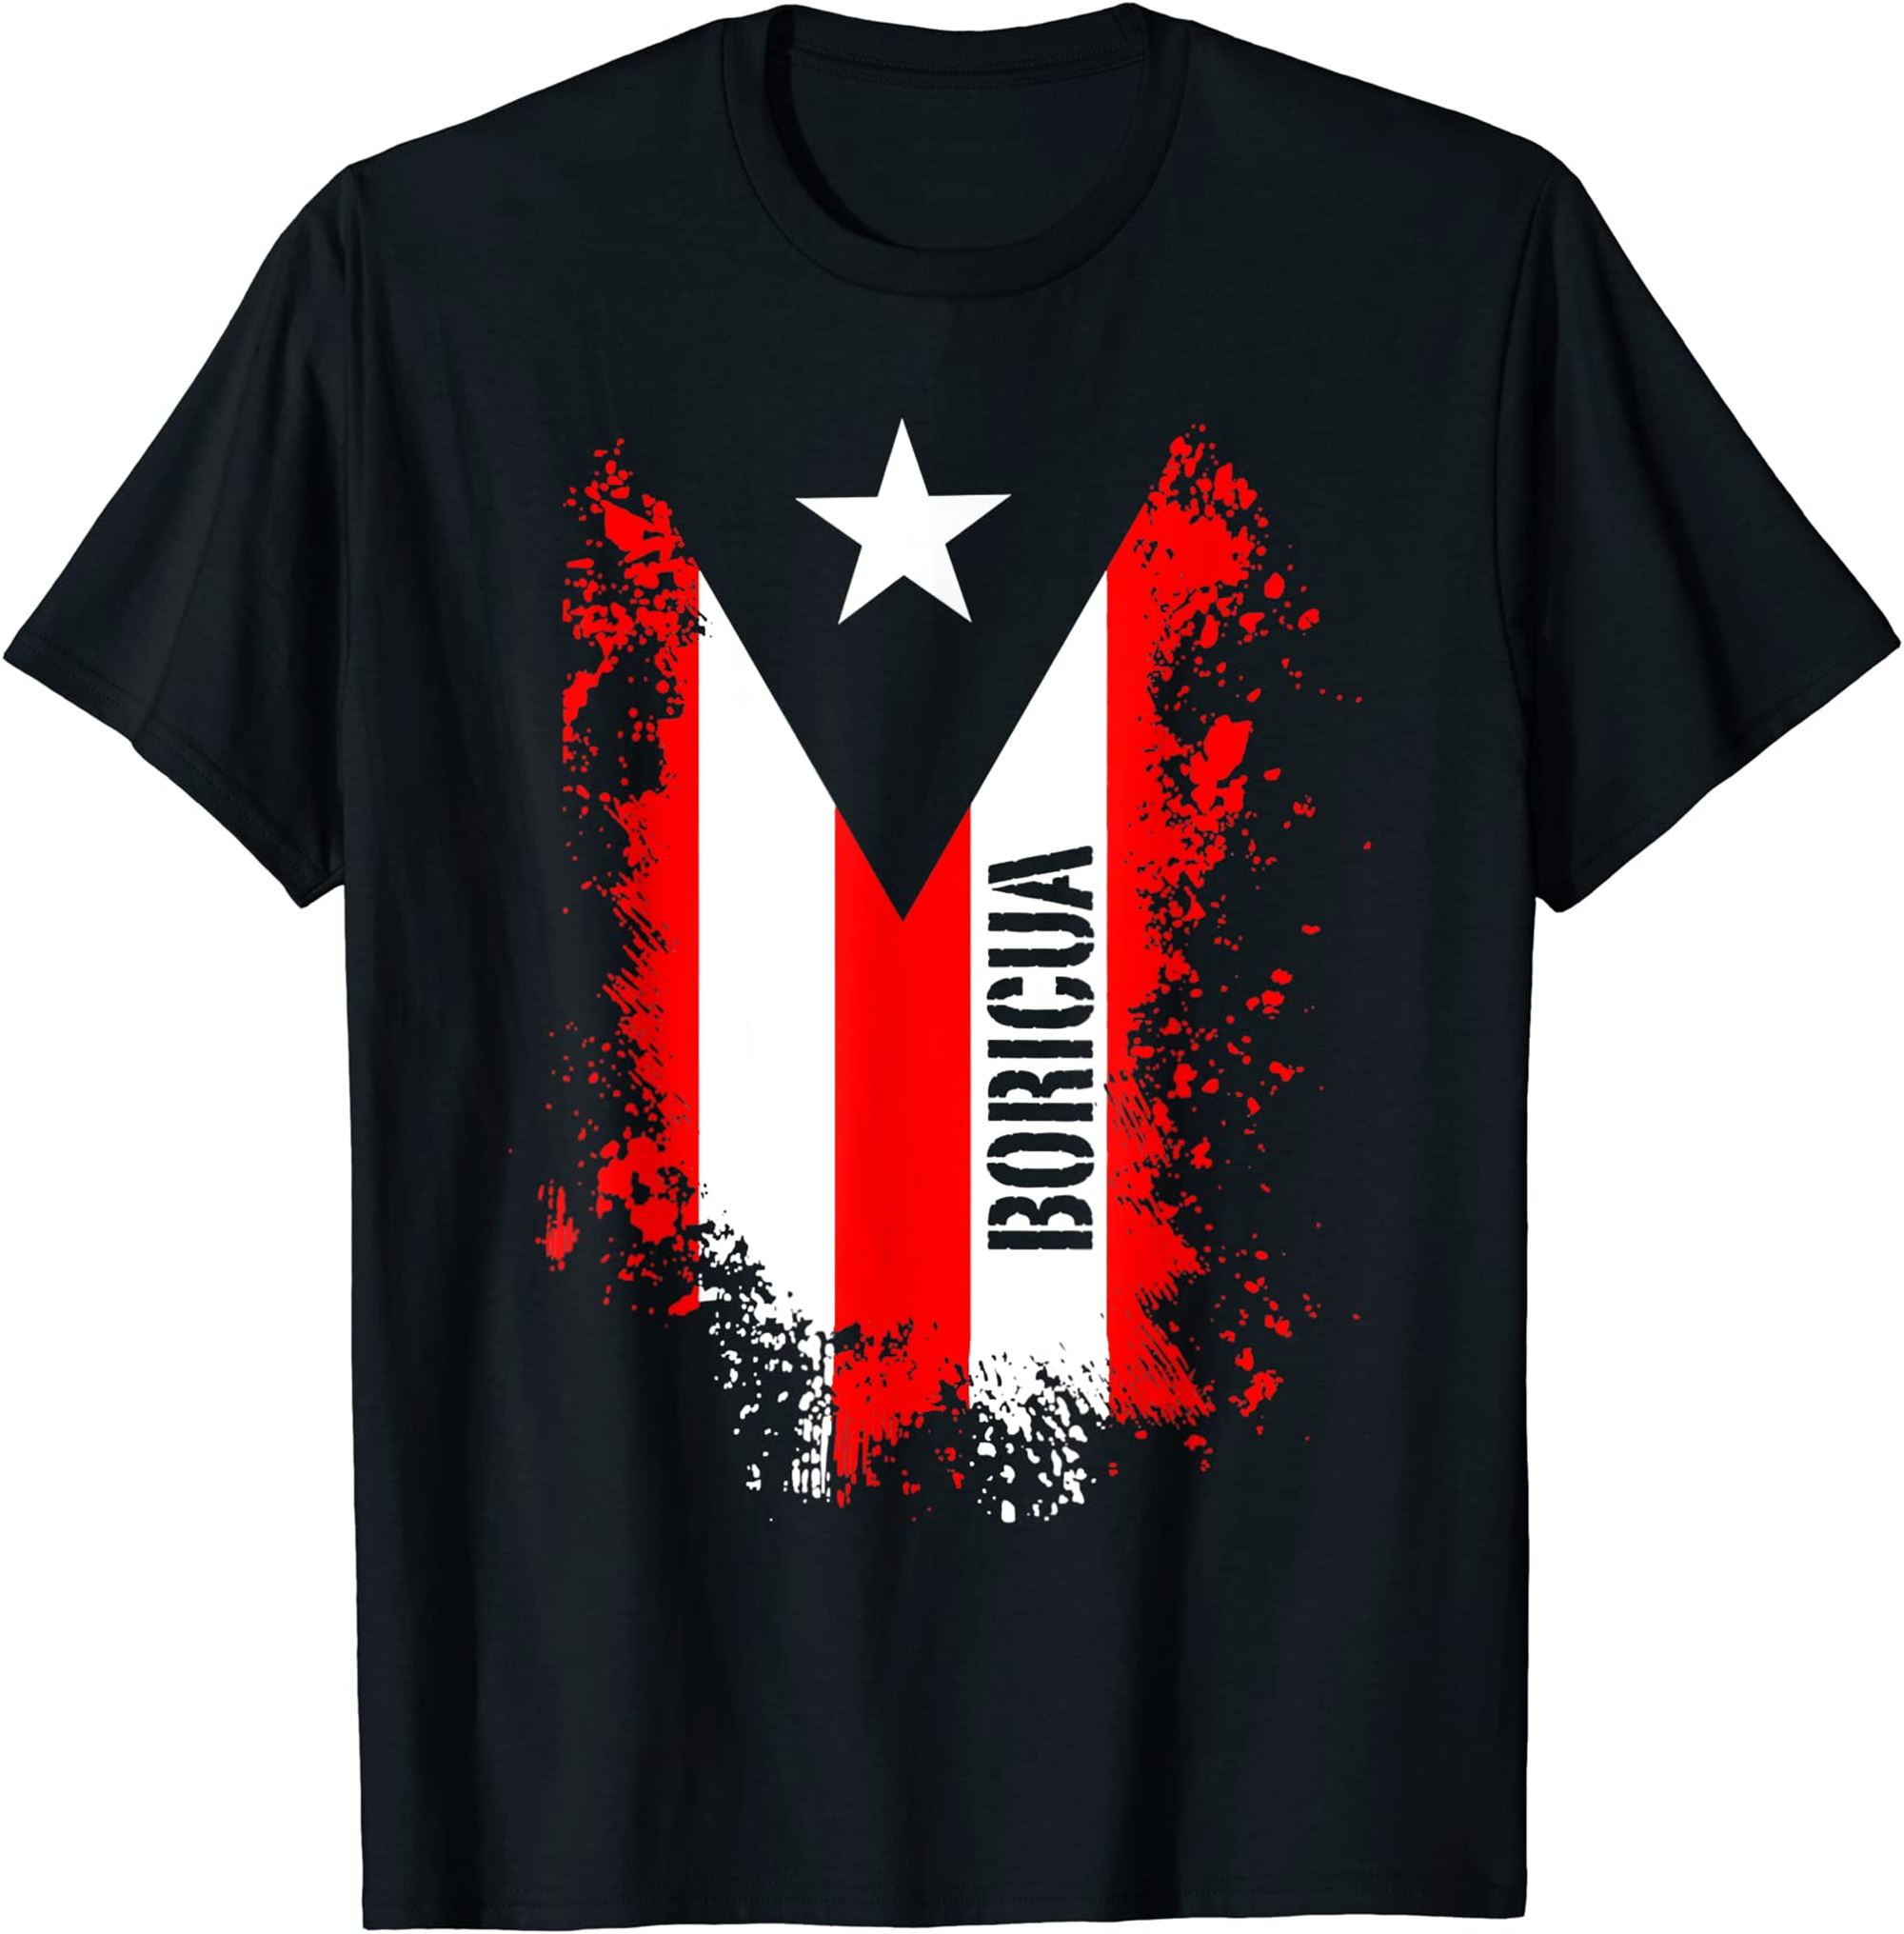 Splattered Boricua Puerto Rican Shirt Puerto Rico Flag Retro T-shirt Size Up To 5xl